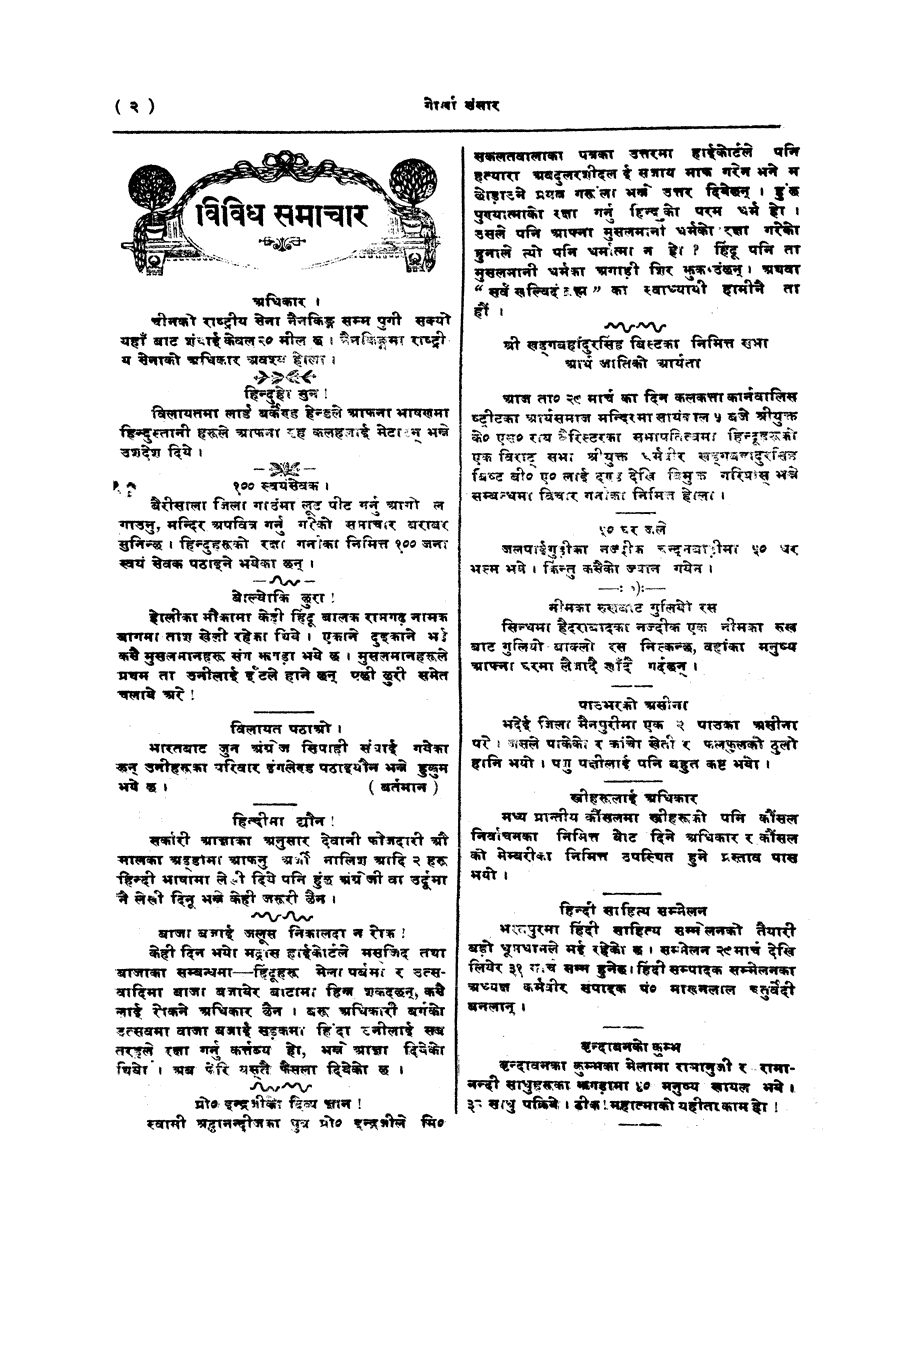 Gorkha Sansar, 29 Mar 1927, page 2